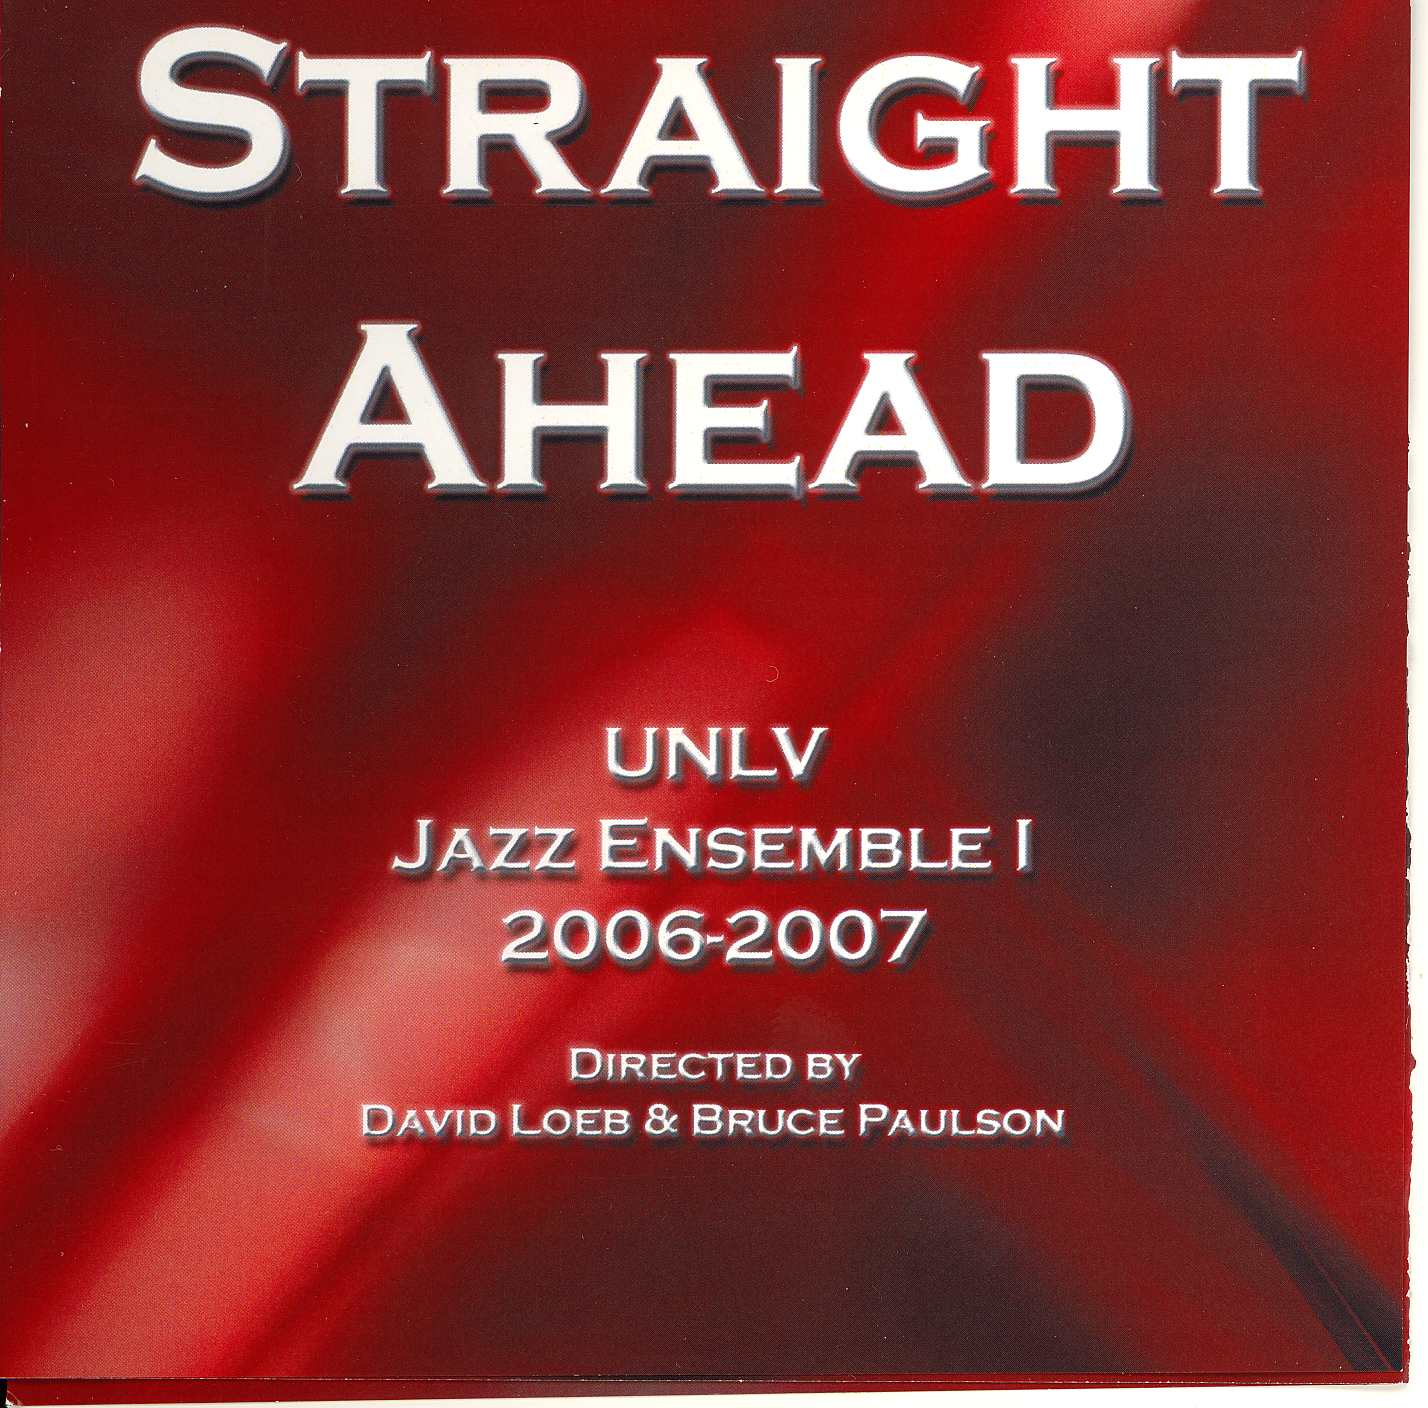 UNLV DEPARTMENT OF MUSIC JAZZ STUDIES PROGRAM - Straight Ahead cover 